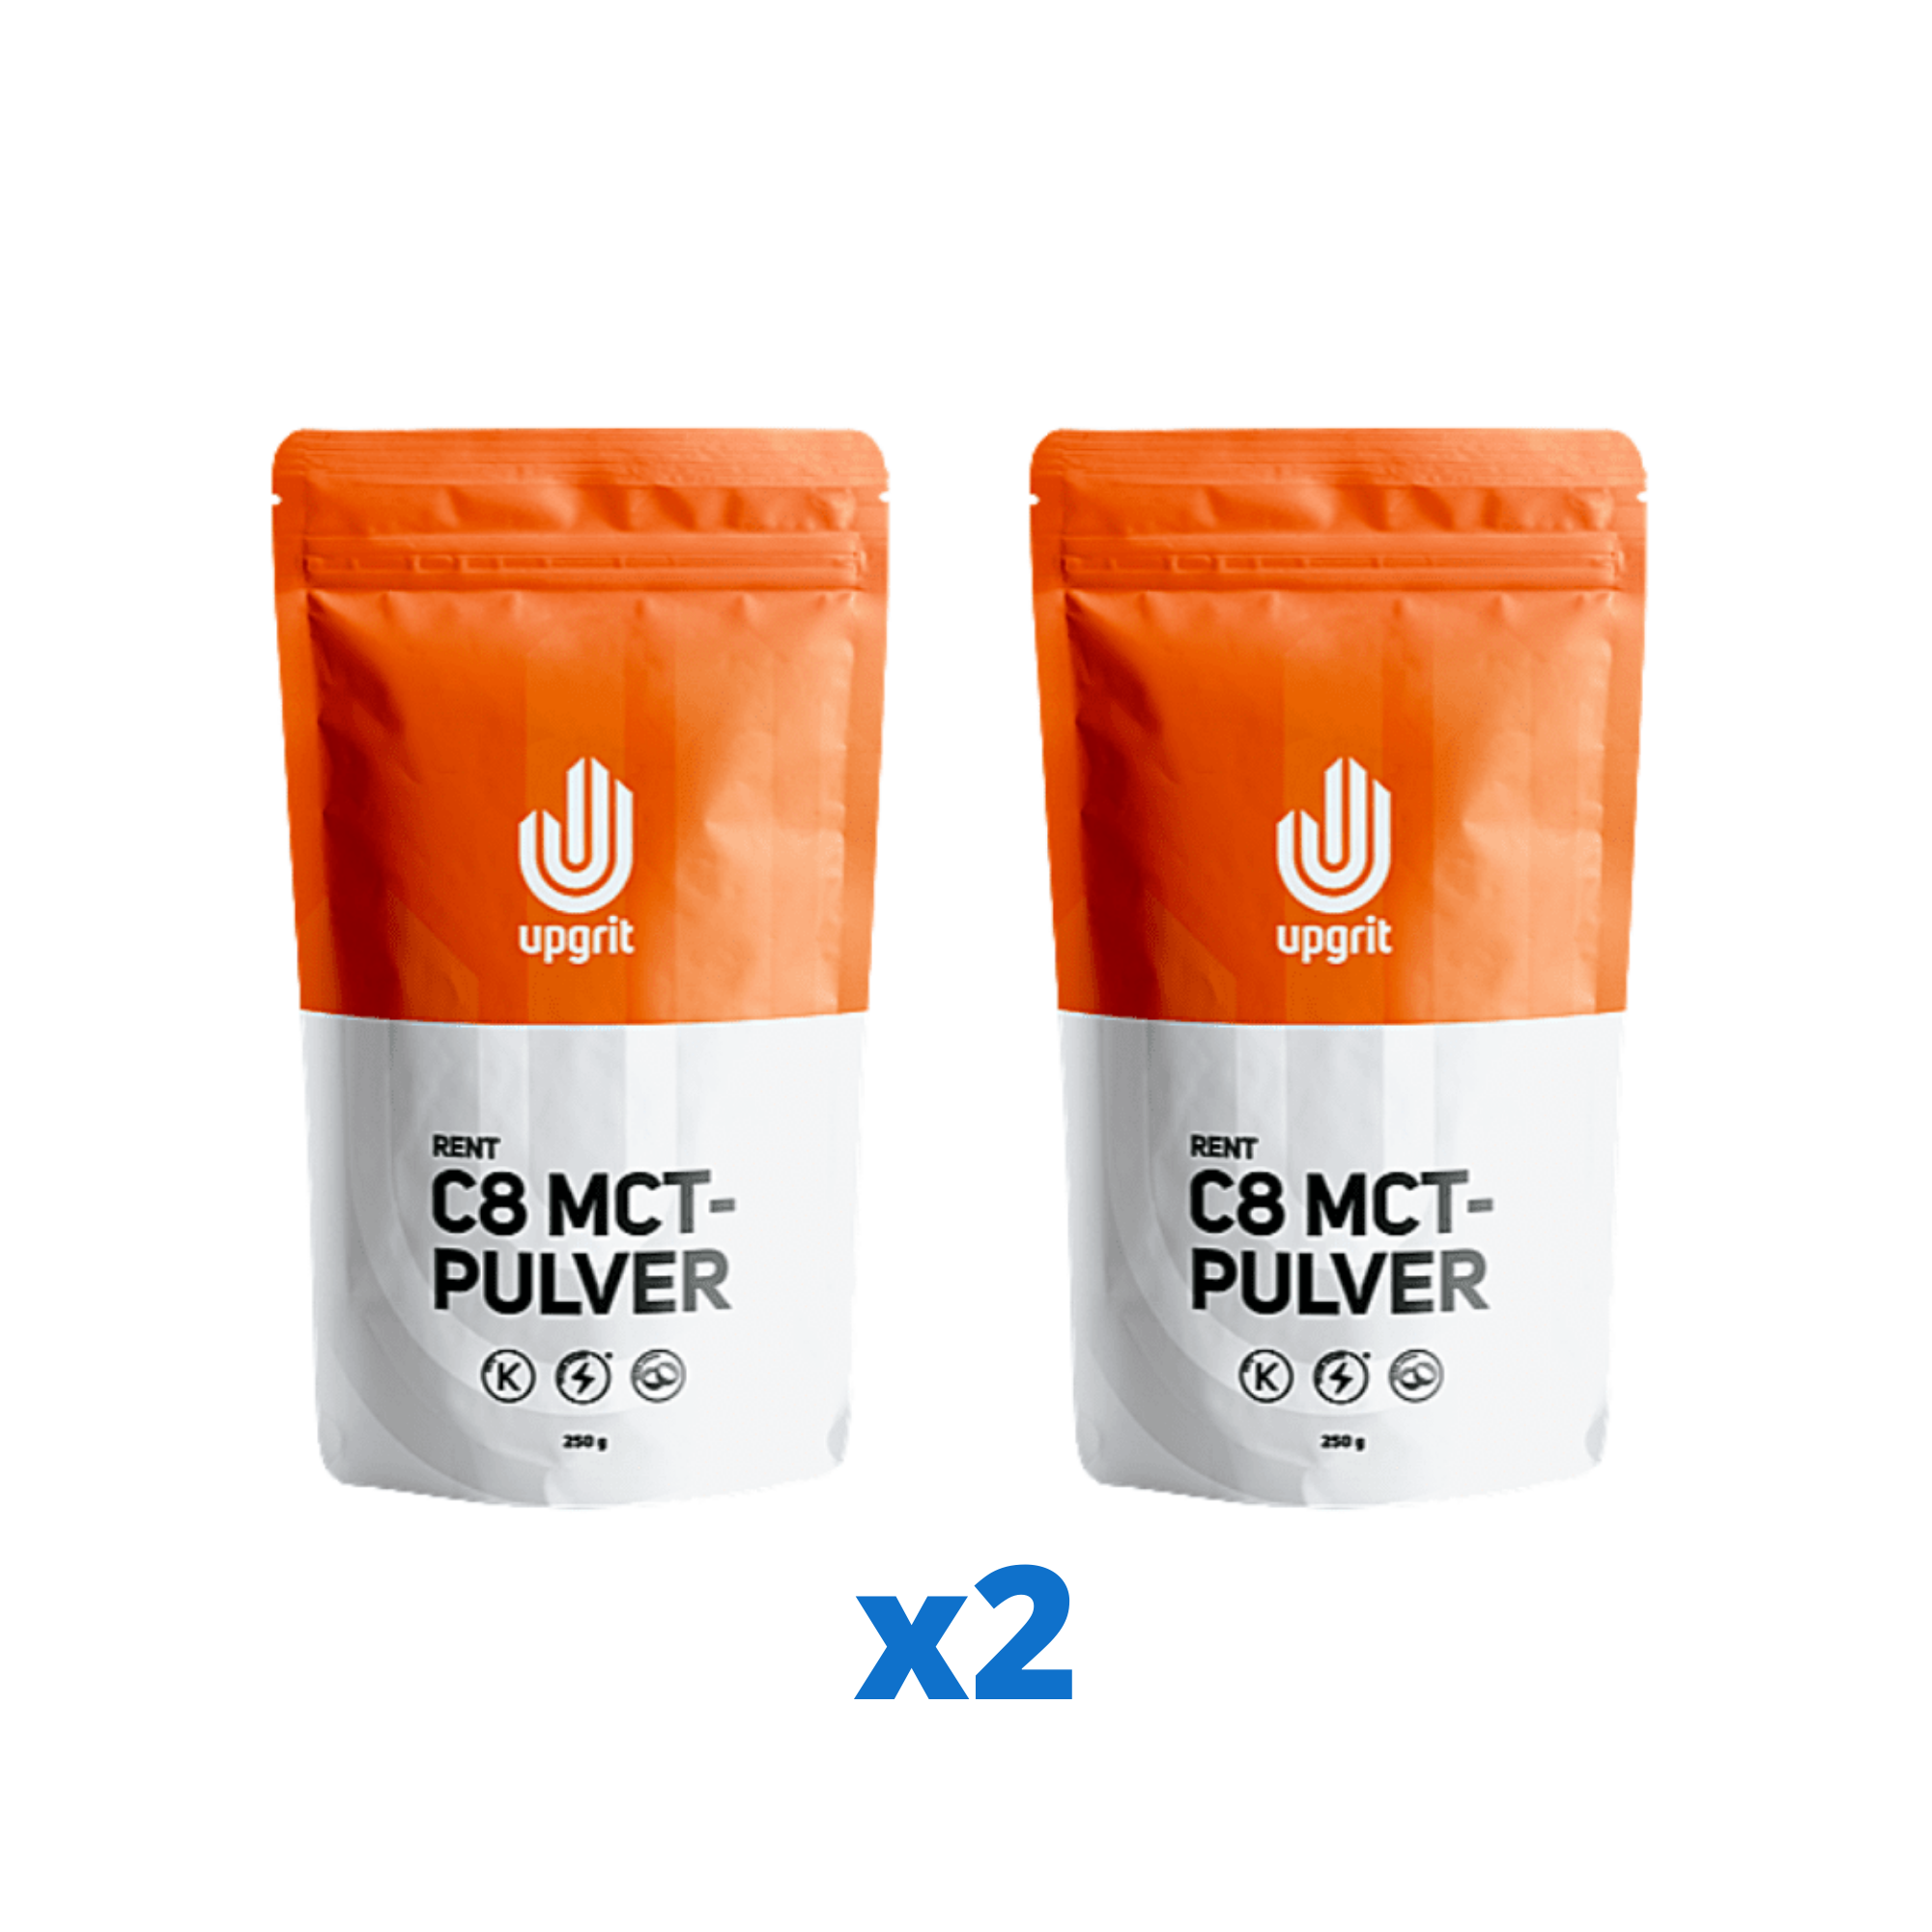 2 x Upgrit Rent C8 MCT-pulver, 250g